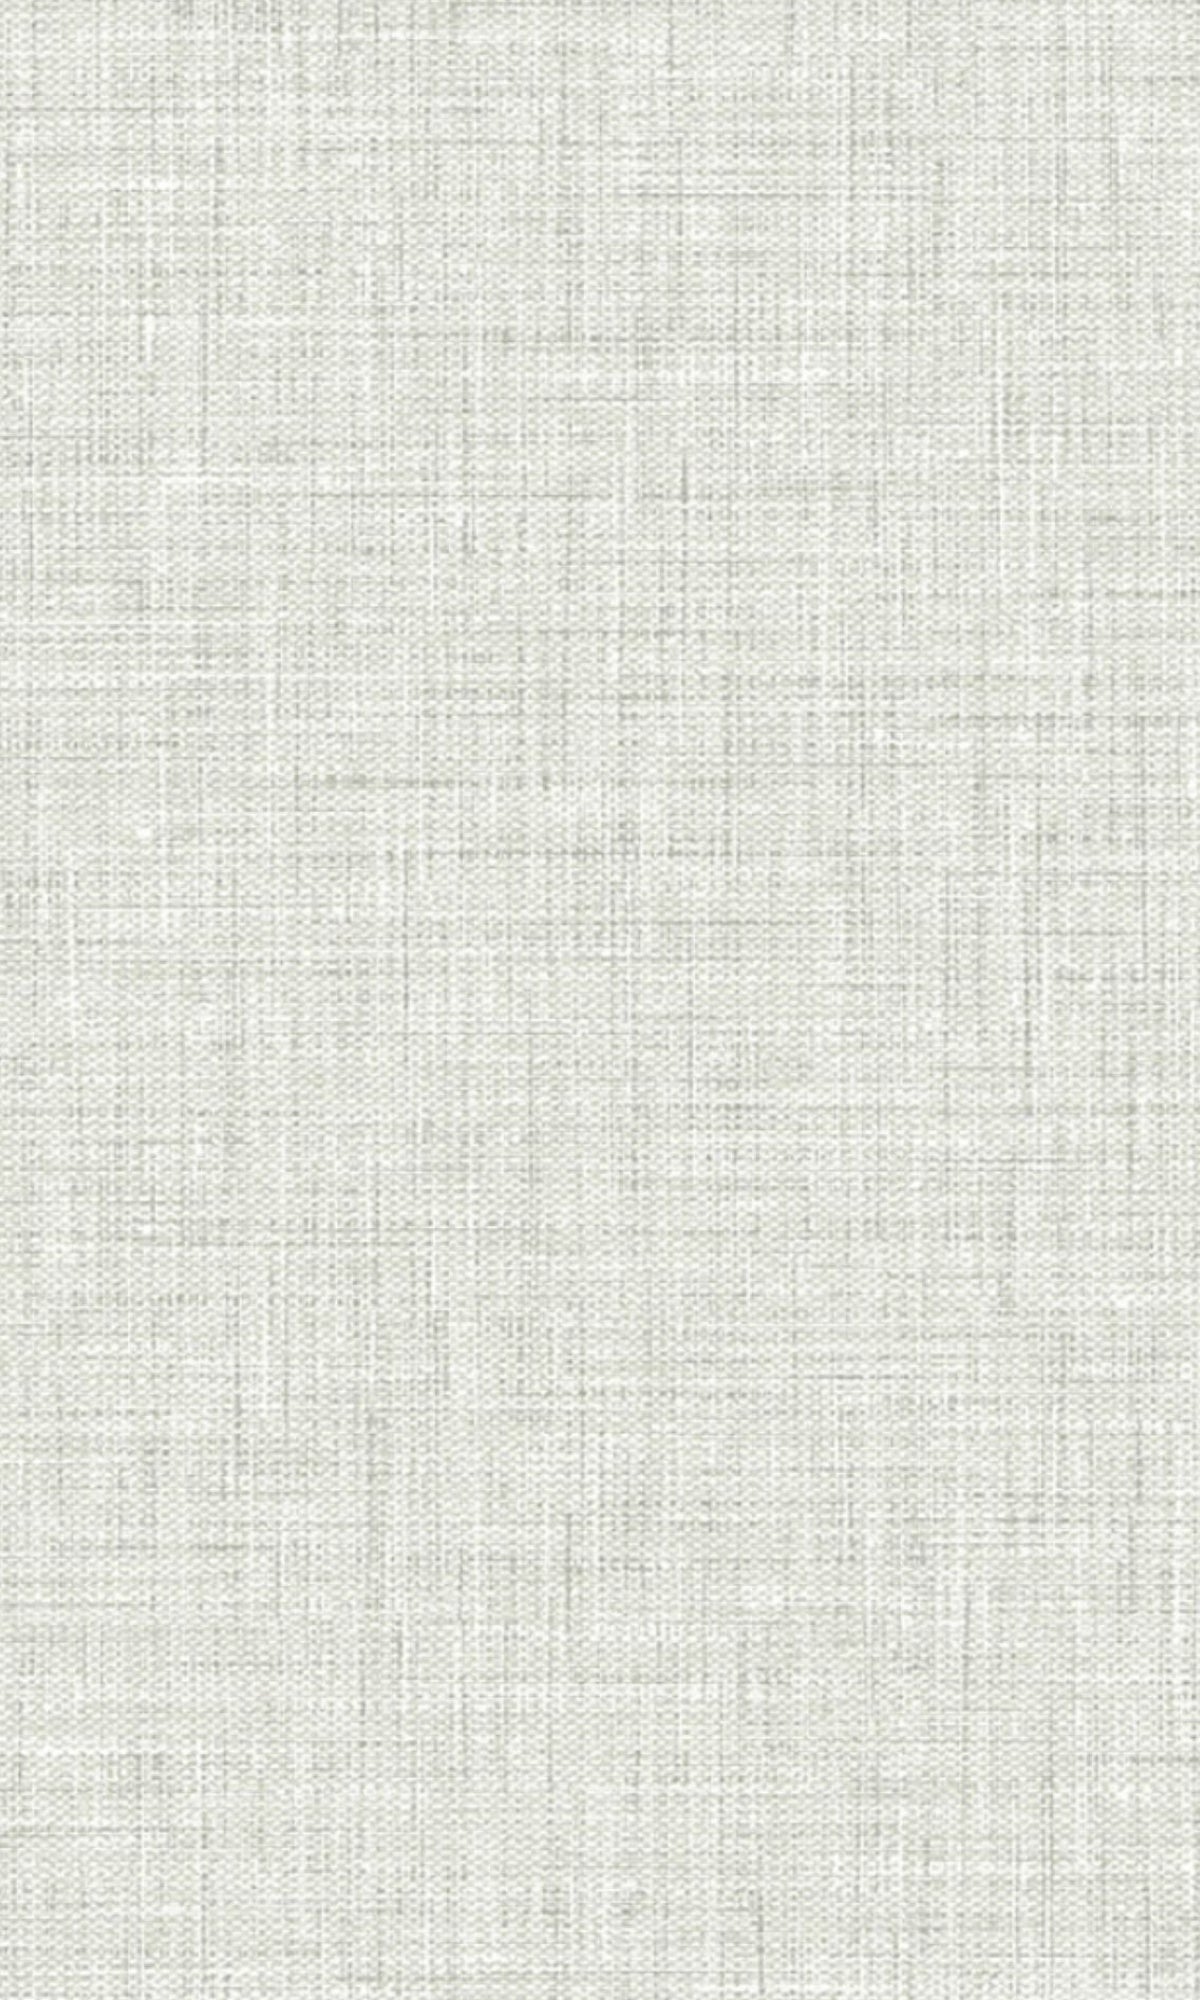 Morning Mist Fabric Like Textured Vinyl Commercial Wallpaper C7599